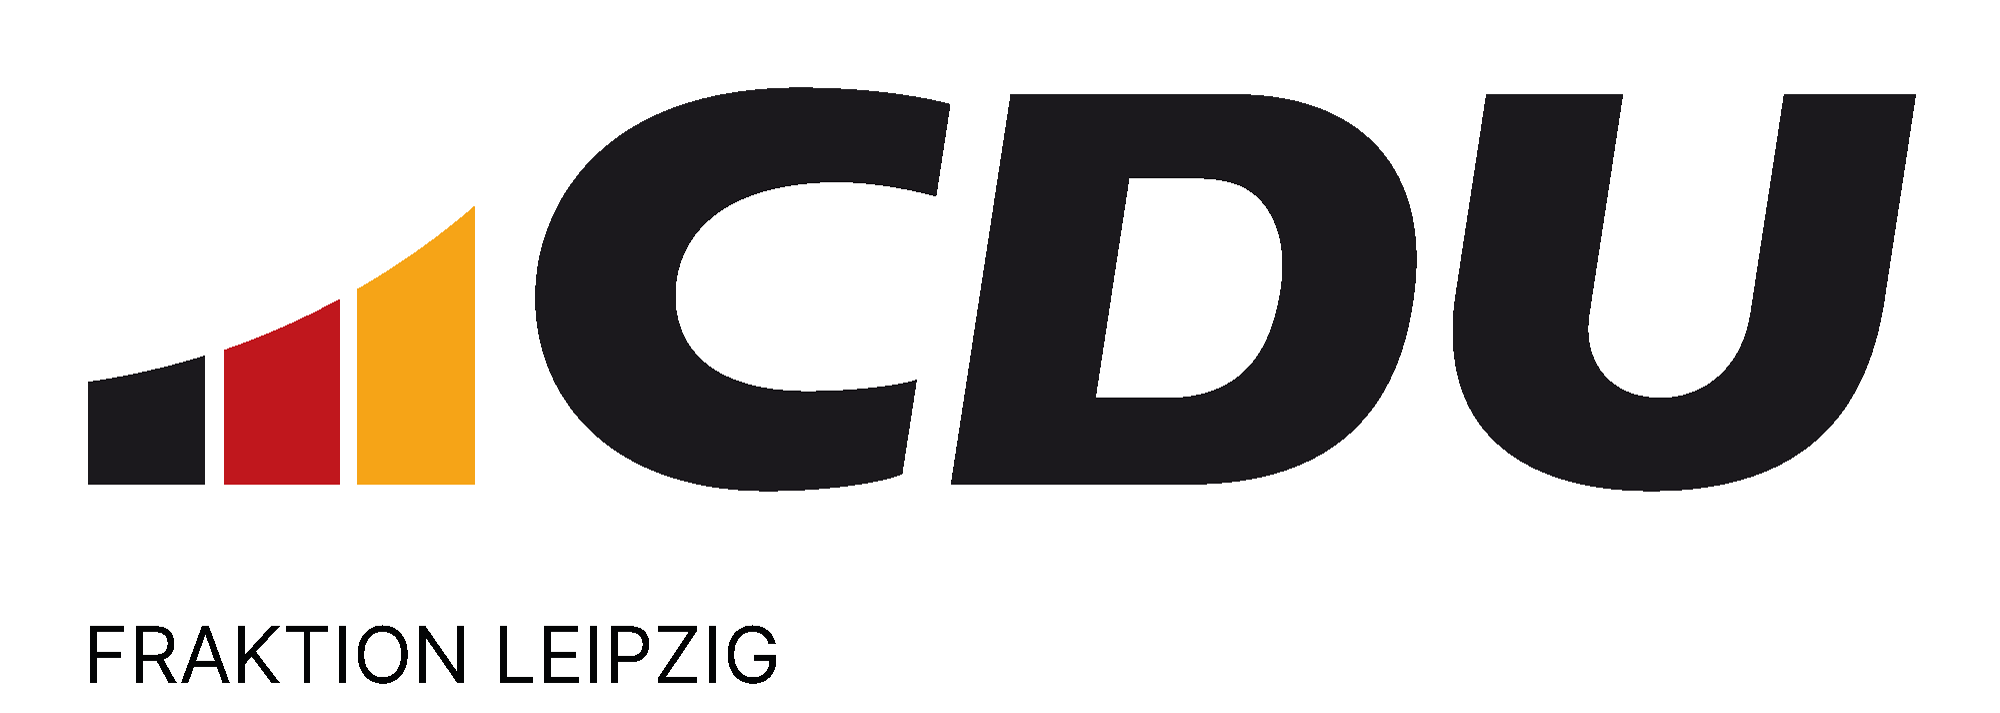 CDU-Fraktion Leipzig